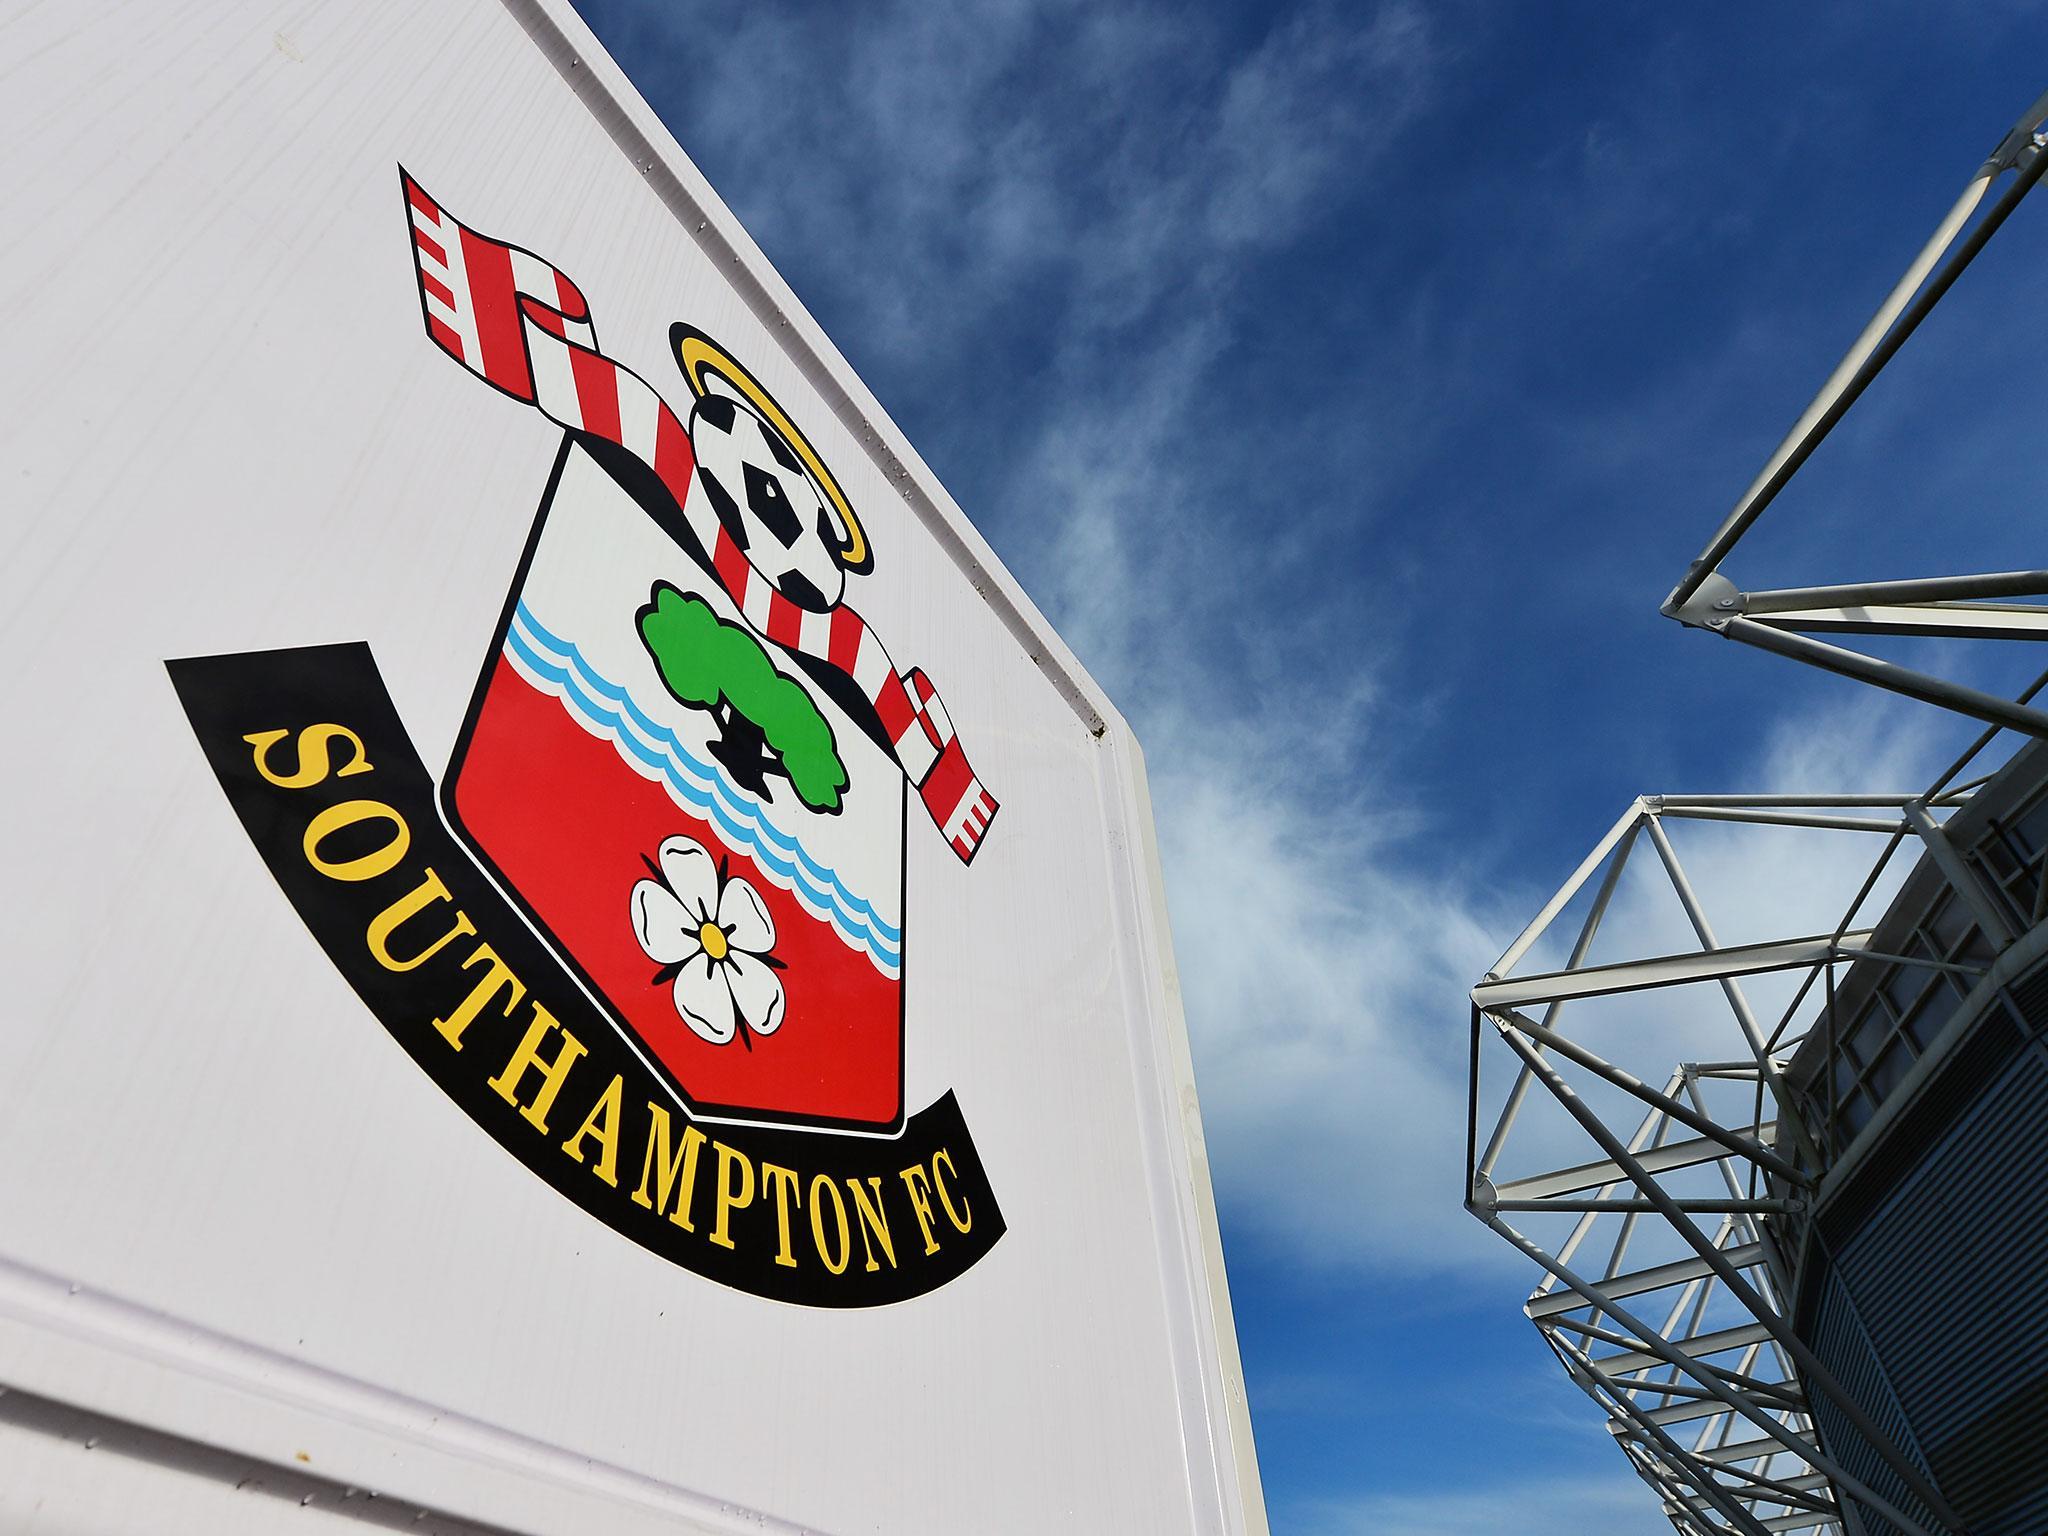 Southampton's new Under-21 women's team will begin next season